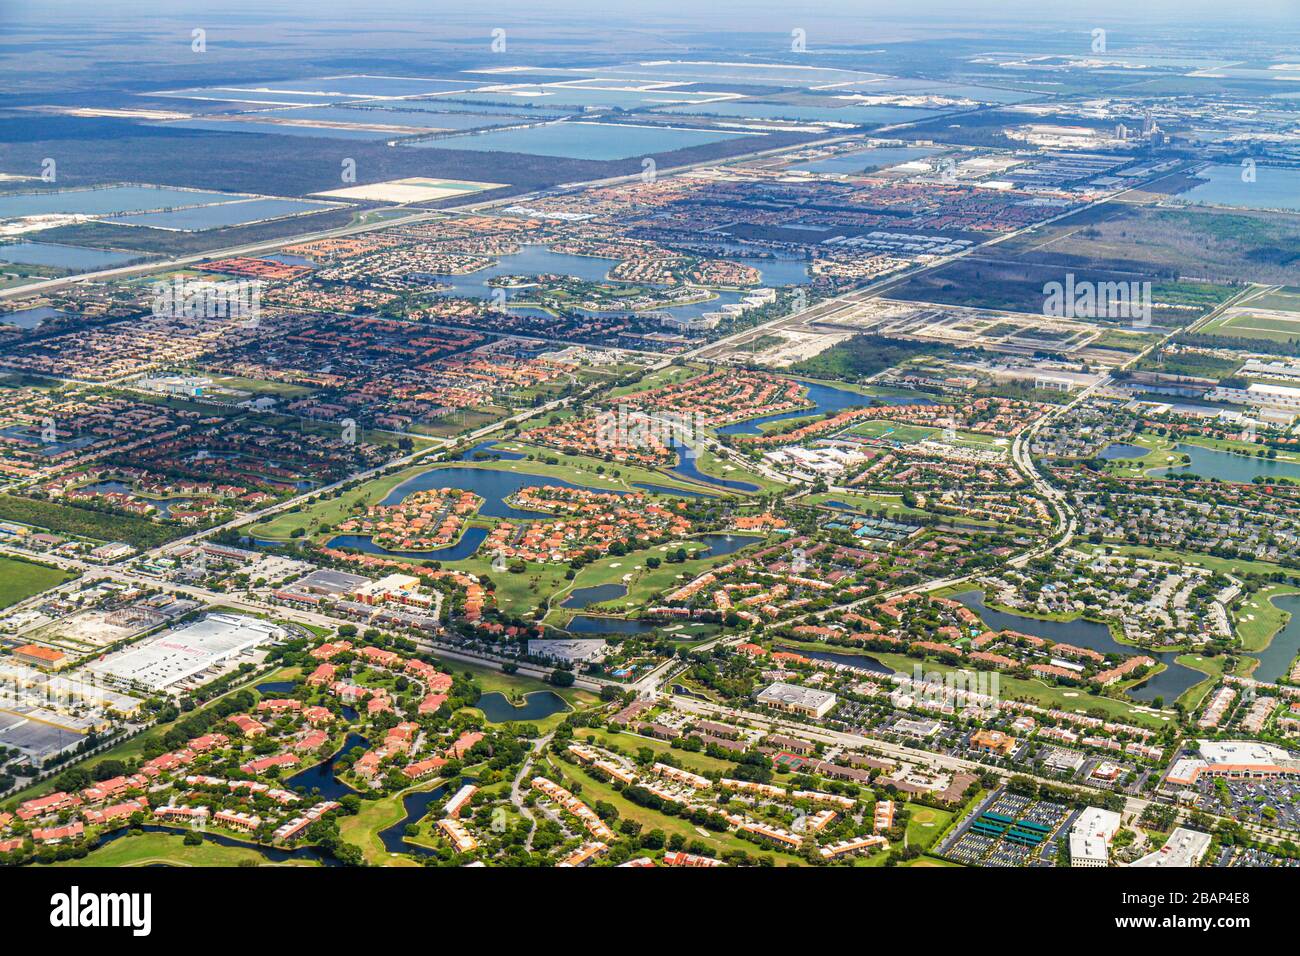 Miami Florida,Doral,aerial window seat view,departing MIA,roads,neighborhoods,golf course,edge of Everglades,FL110516044 Stock Photo